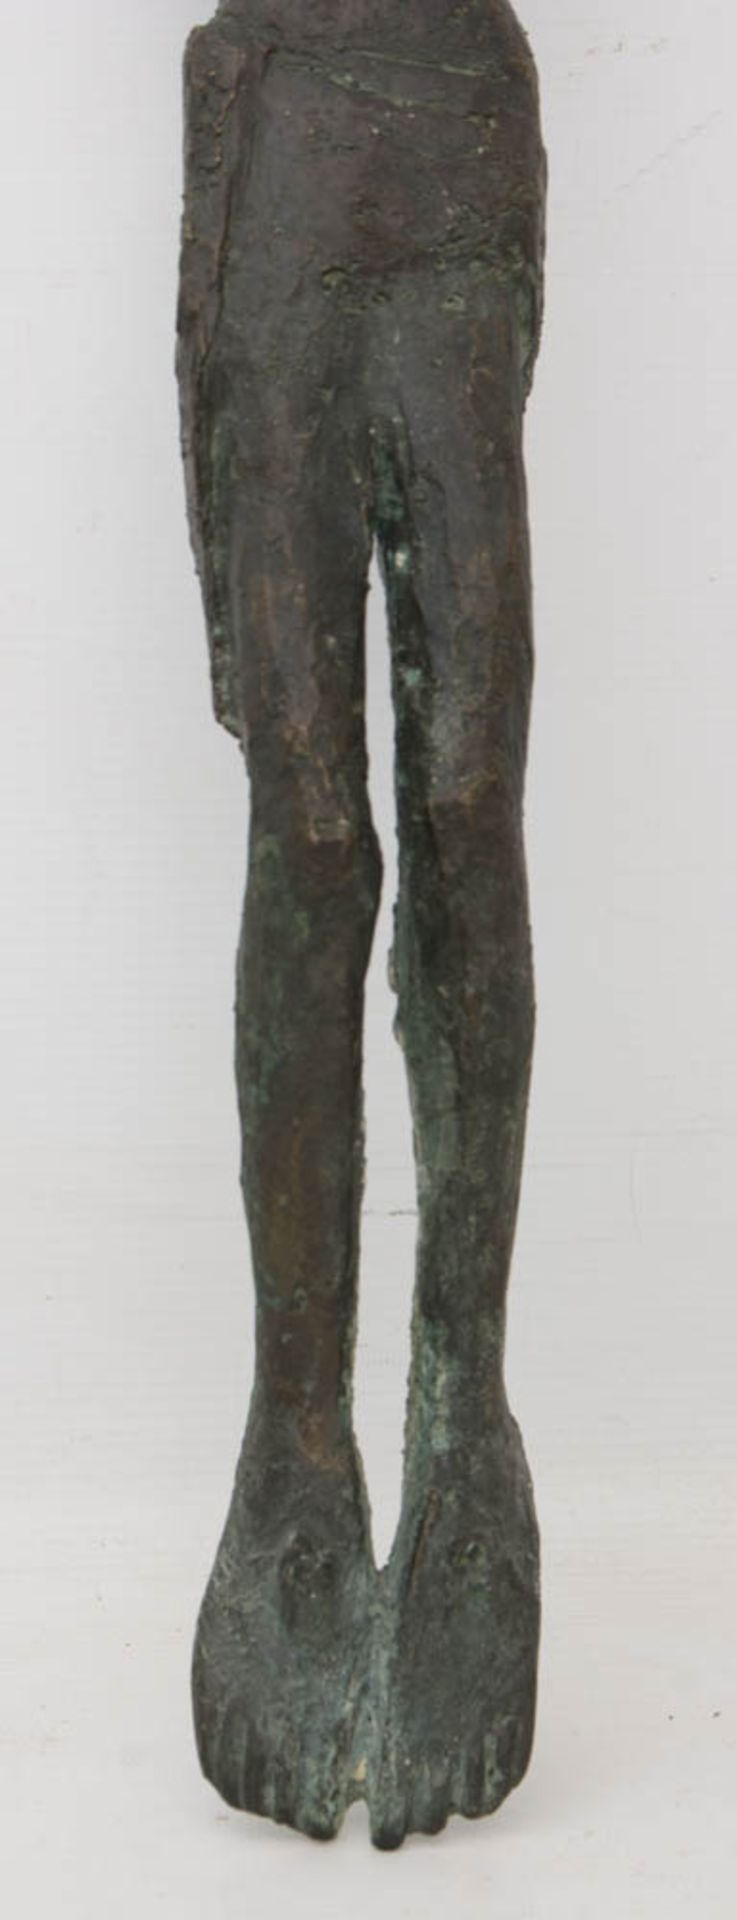 UNBEKANNTER KÜNSTLER, Christus ohne Kreuz, Bronzeguss, 20 Jh.Starke Patina, guter Zustand.69 cm L. - Image 4 of 5